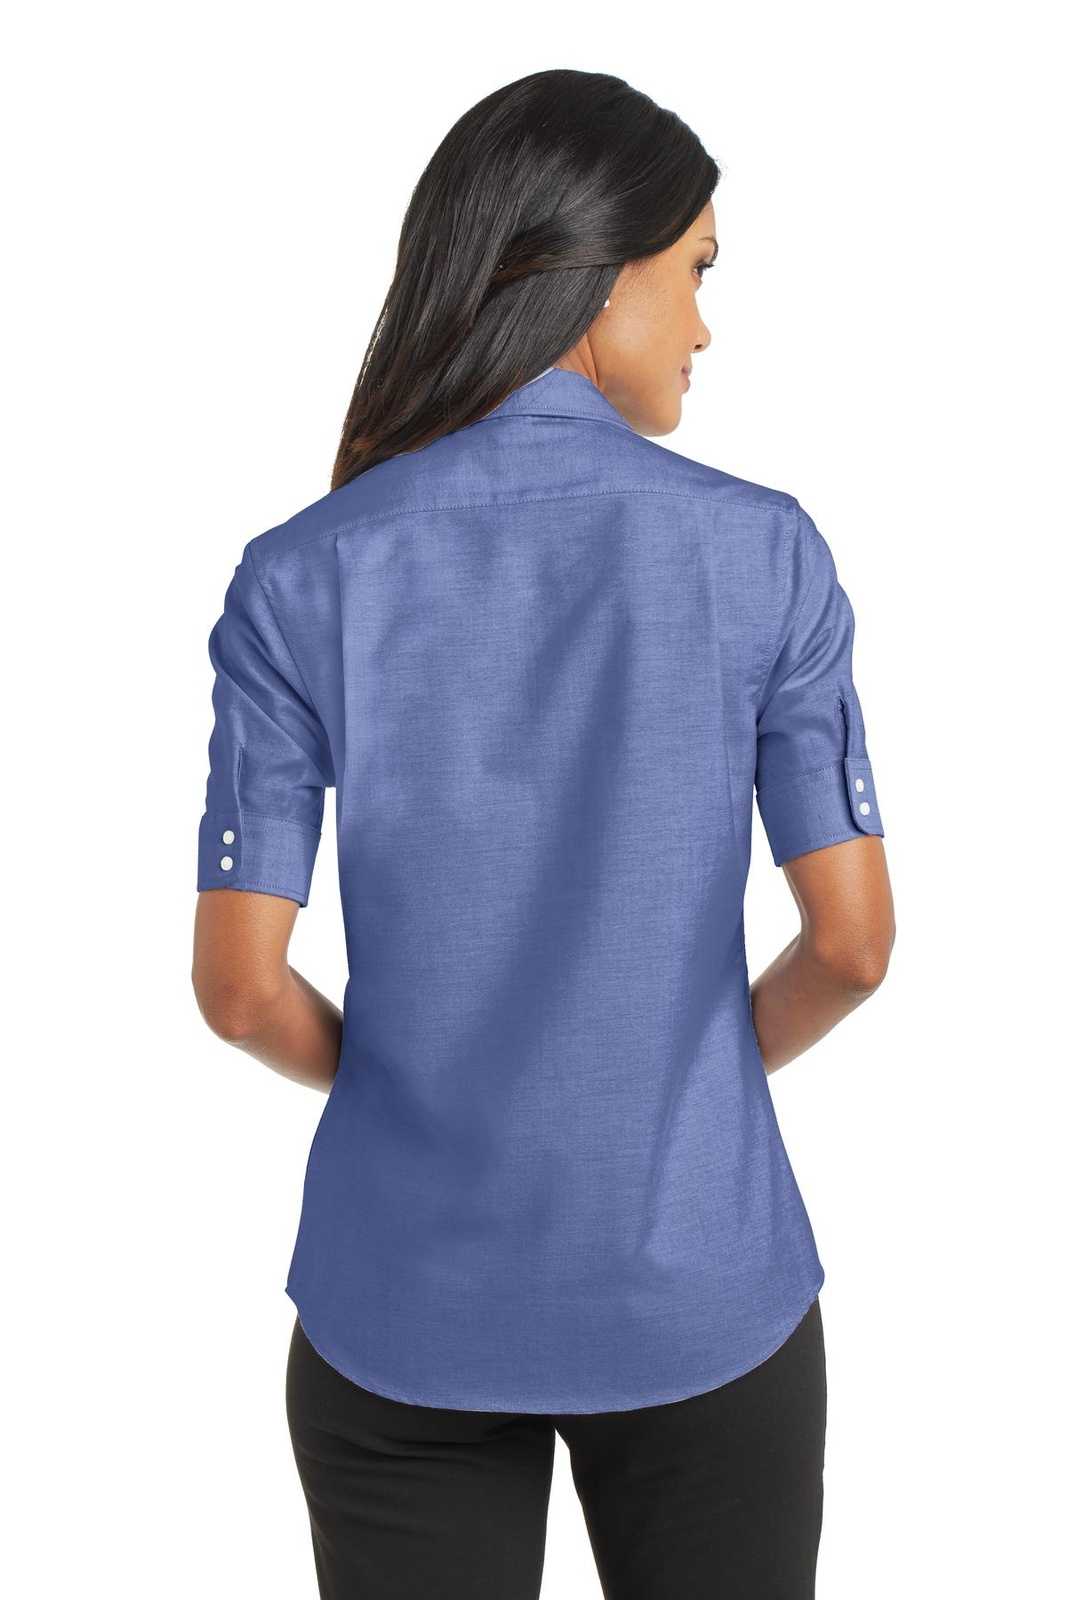 Port Authority L659 Ladies Short Sleeve Superpro Oxford Shirt - Navy - HIT a Double - 1